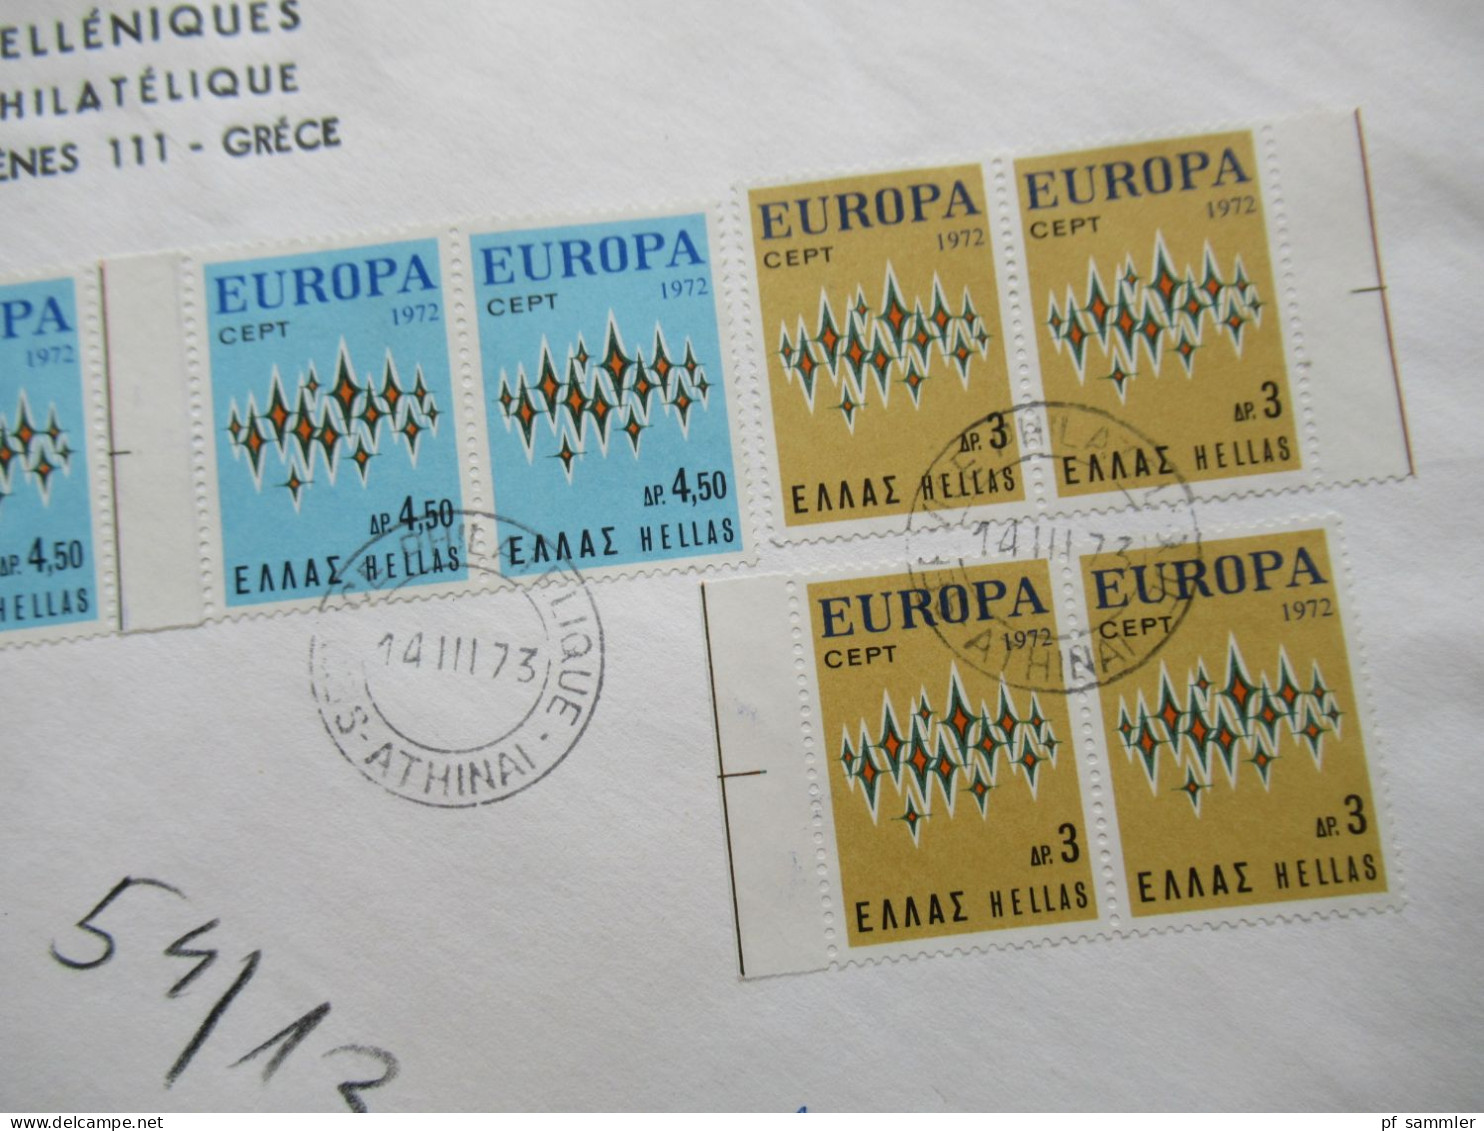 Griechenland Europa Cept 1972 Einschreiben Athinai Postes Helleniques Service Philatelique Nach Bamberg Gesendet - Brieven En Documenten